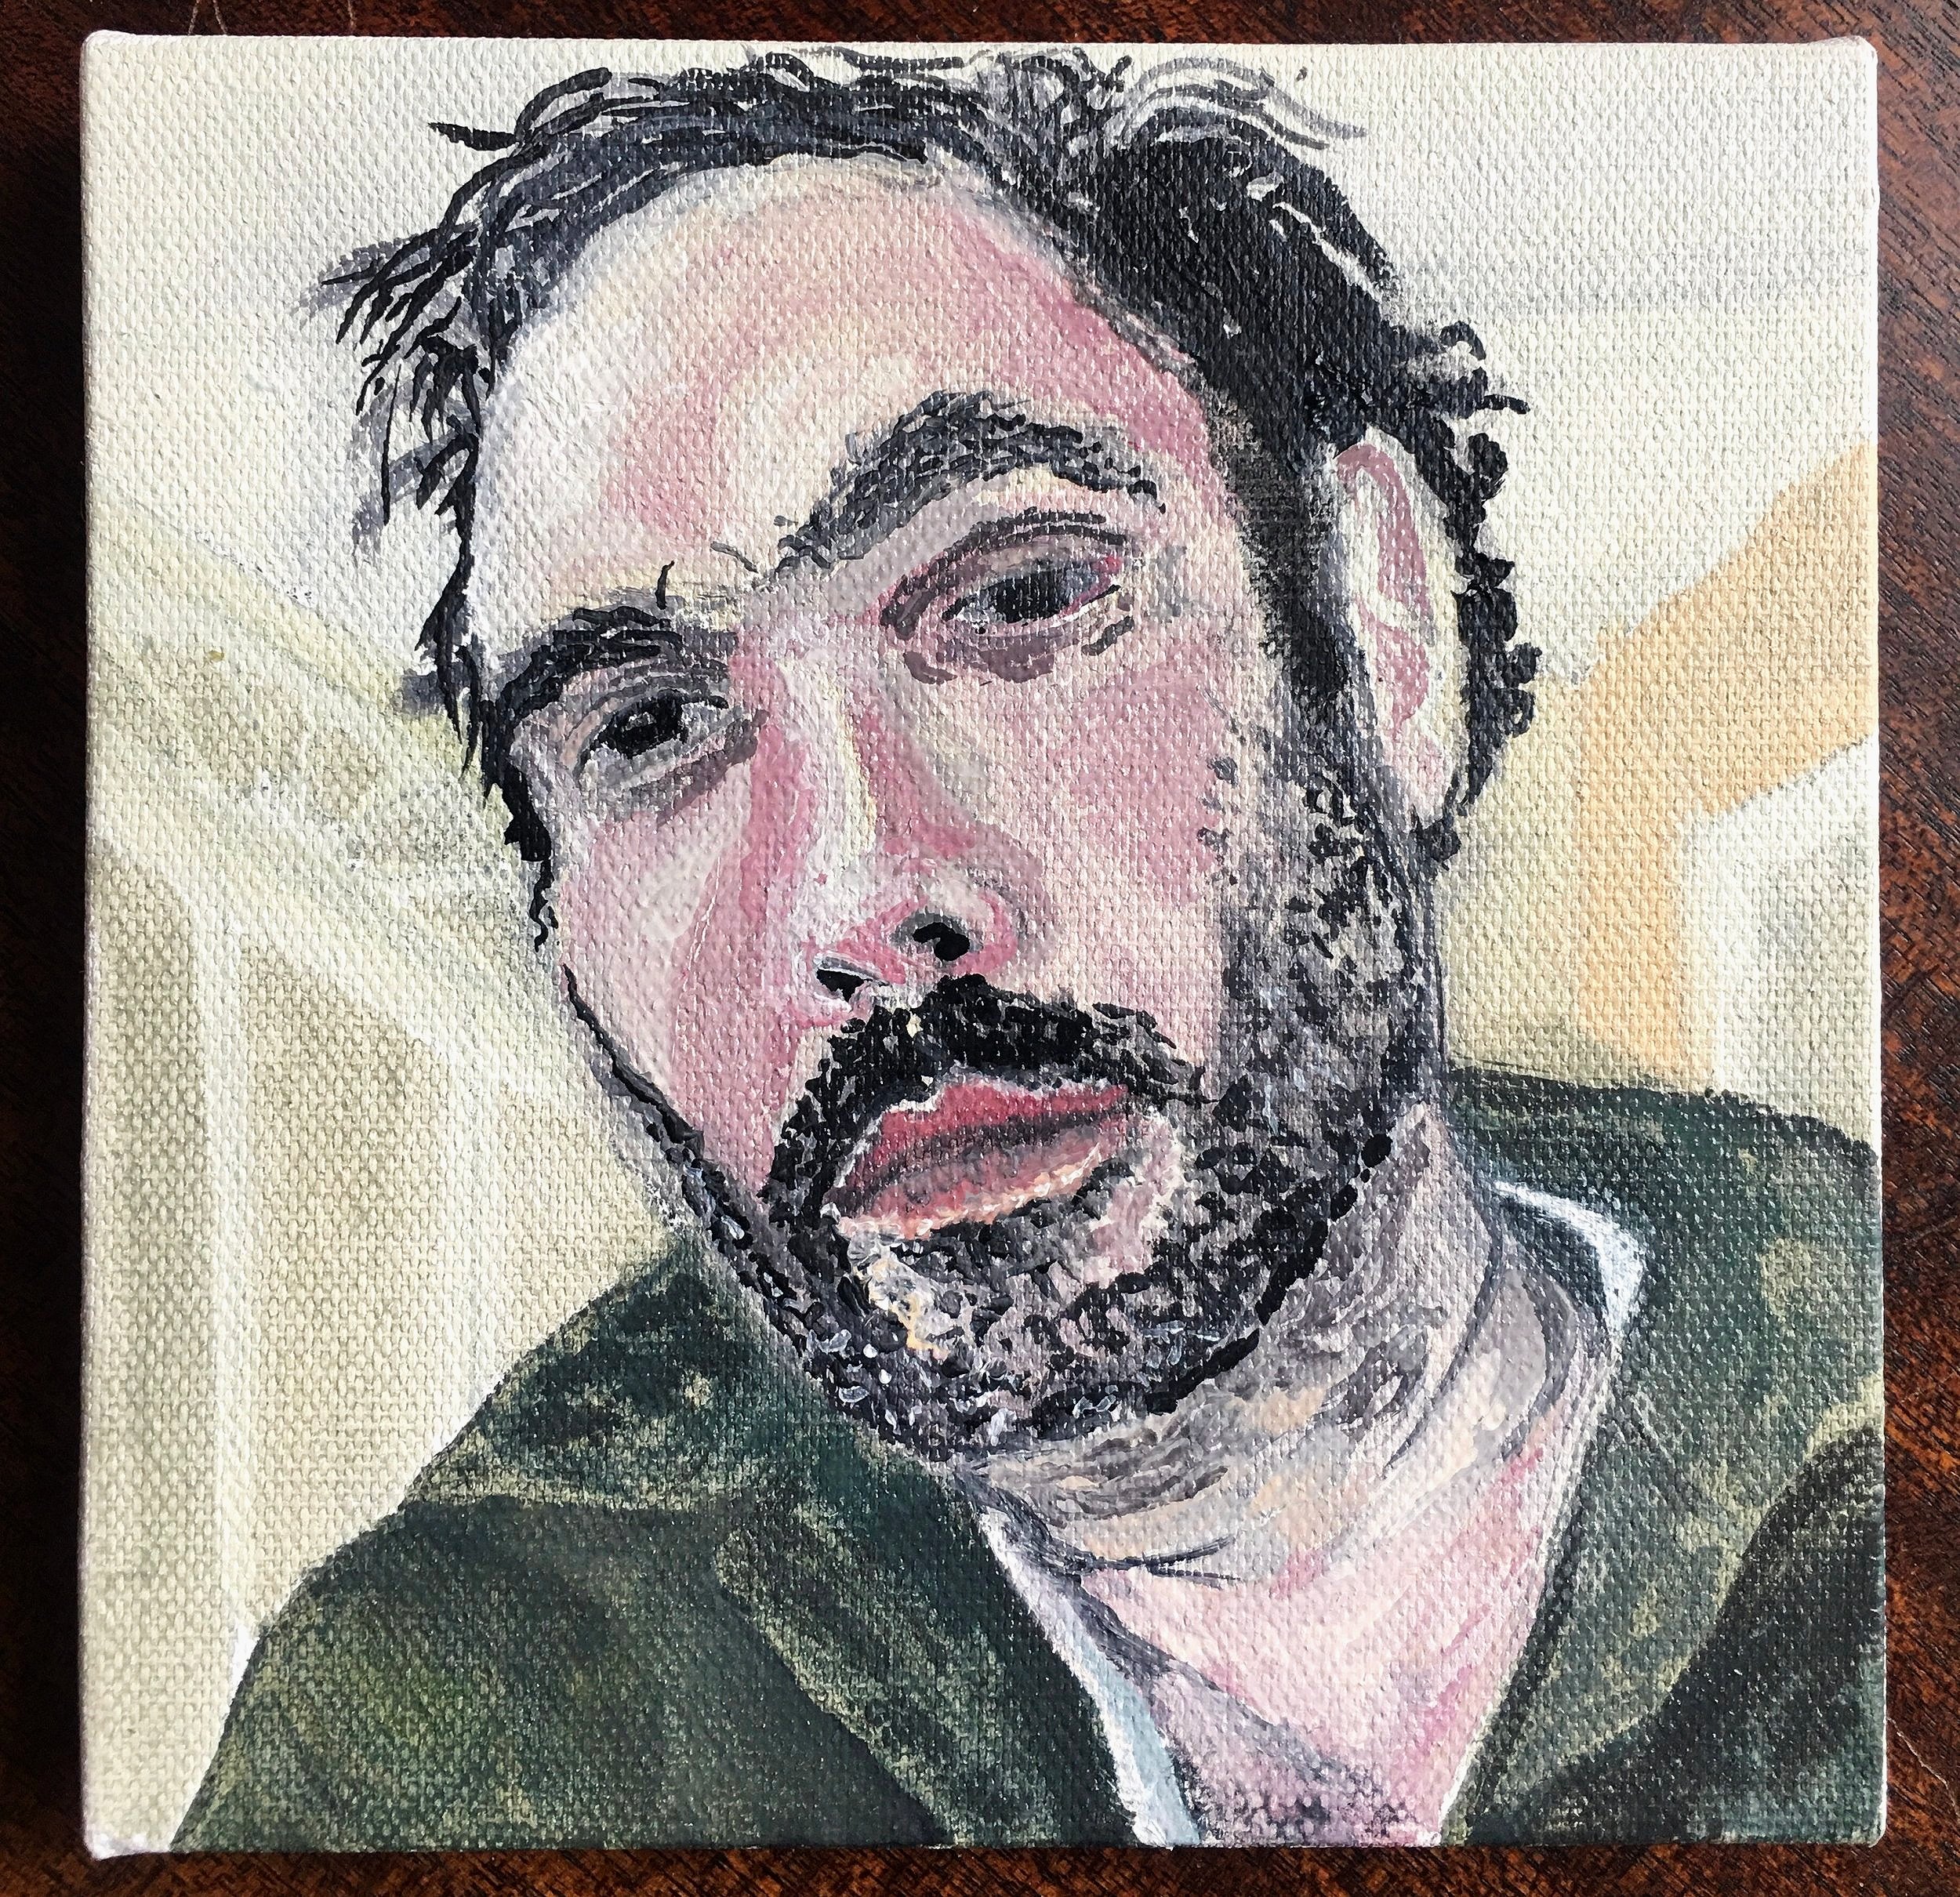   Self Portrait in Spring Studio,  Oil on Canvas, 6” x 6”, 2021 